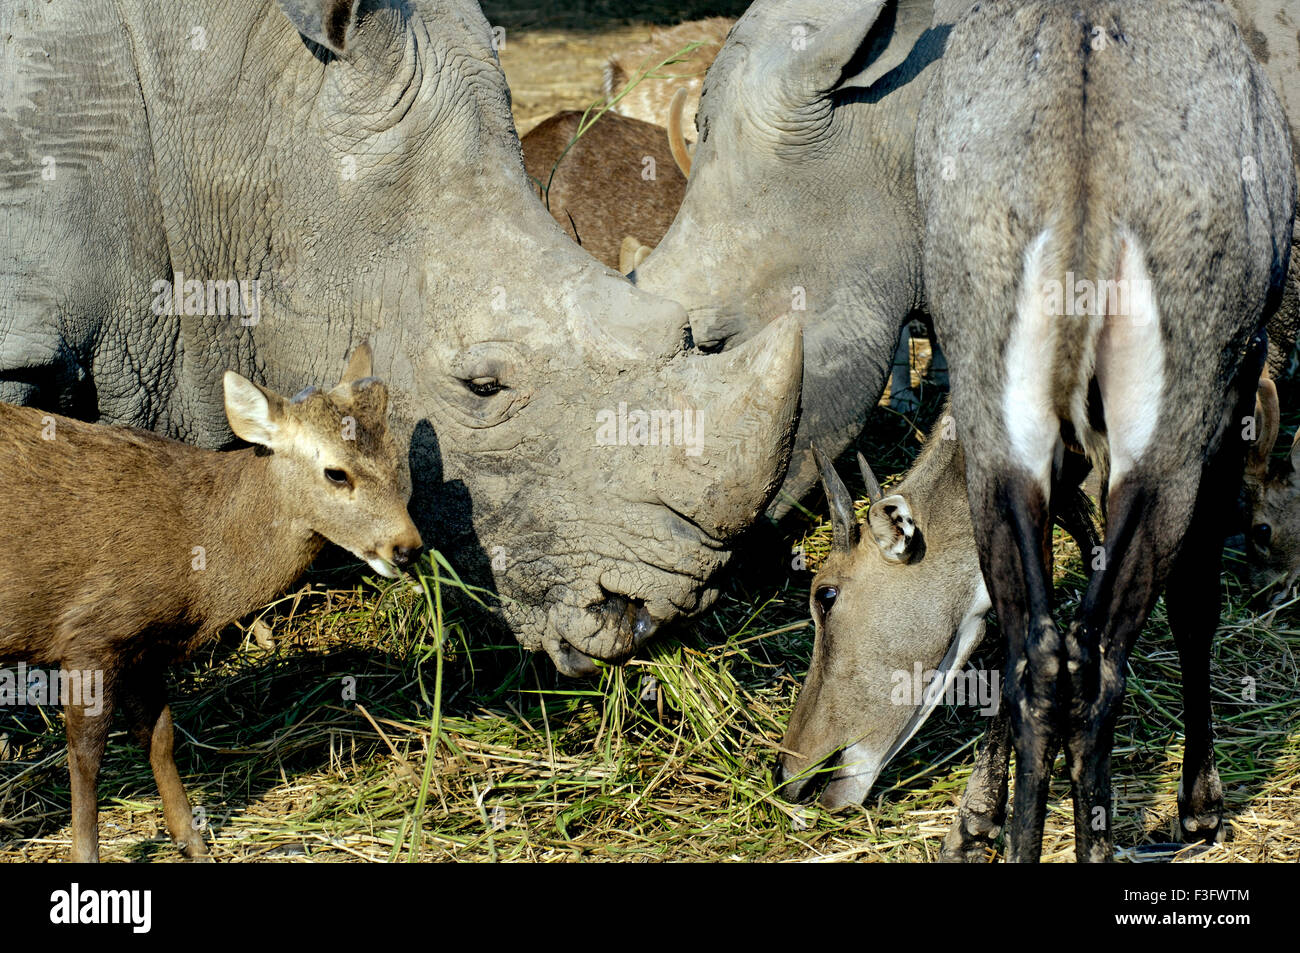 Rhinoceros One horned (Rhinoceros unicornis) and deer grazing grass Safari world Bangkok ; Thailand ; South East Asia Stock Photo